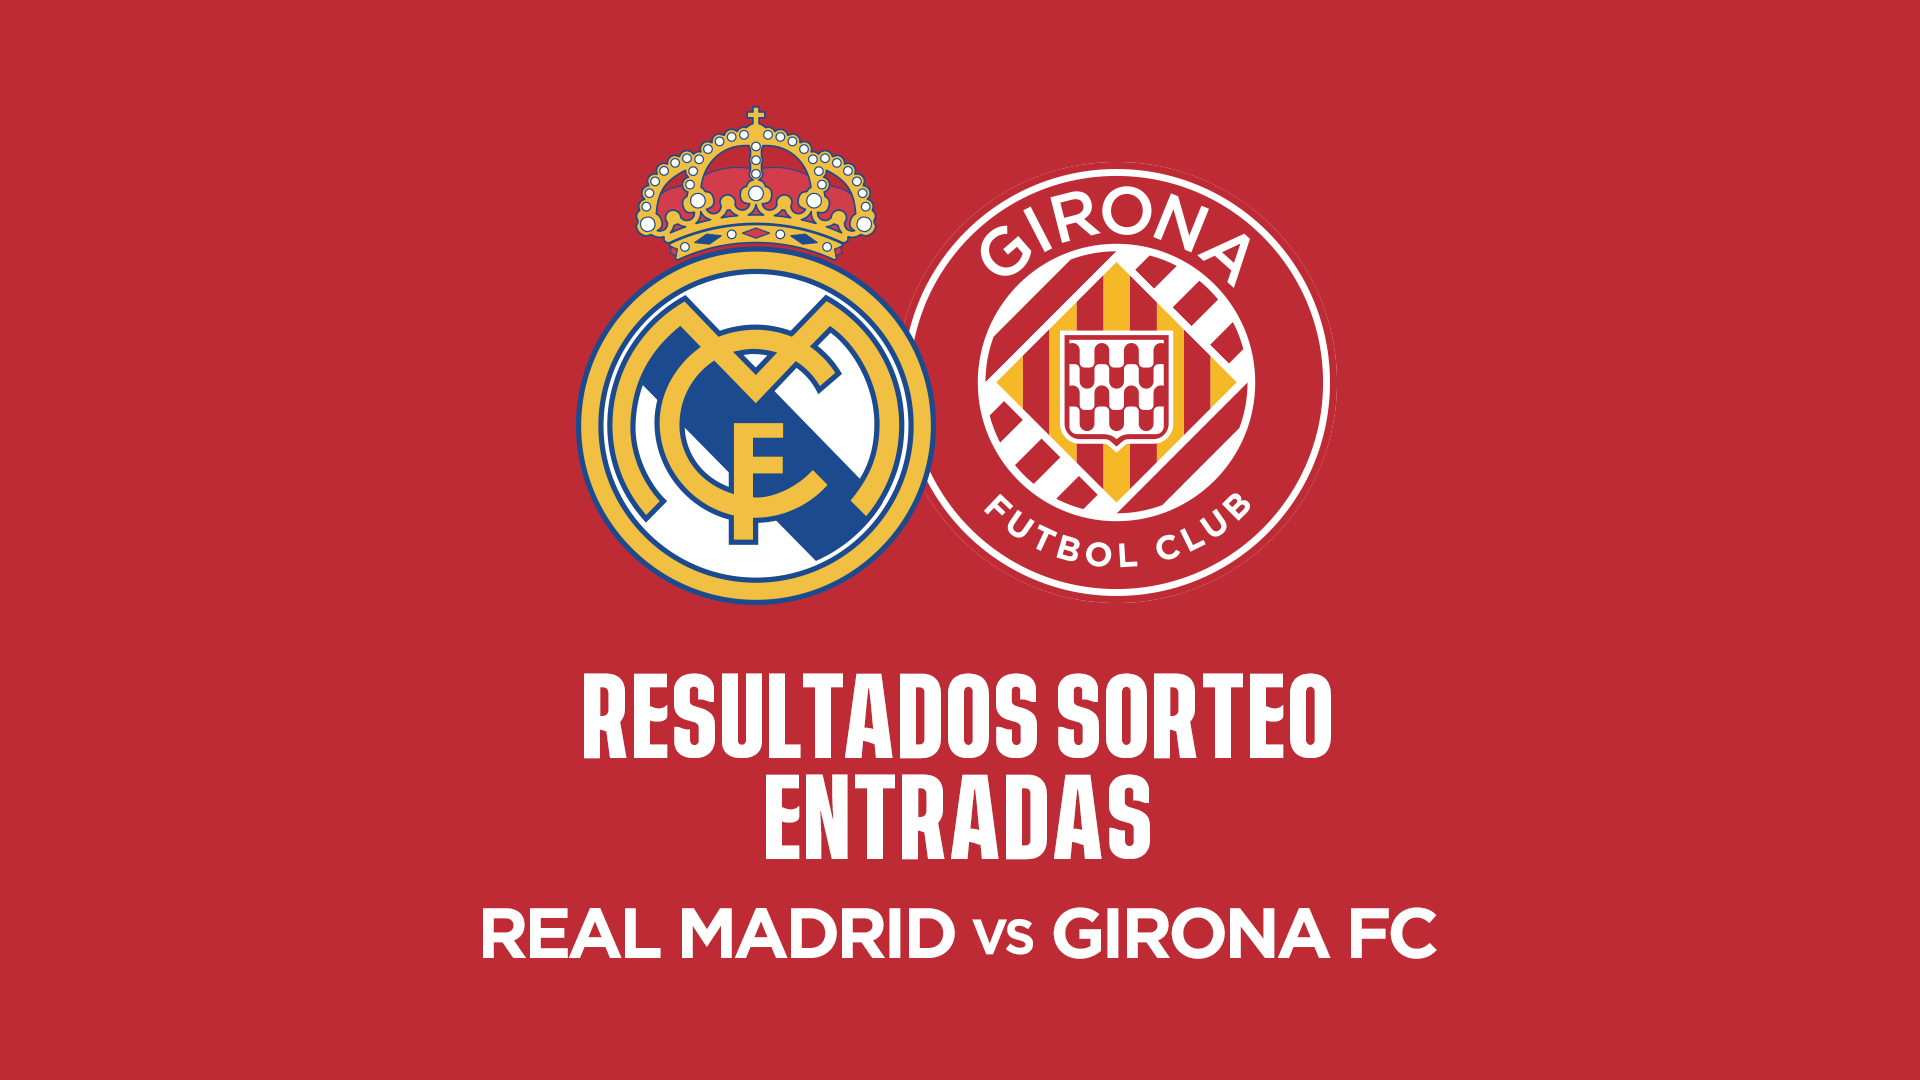 Girona - real madrid entradas